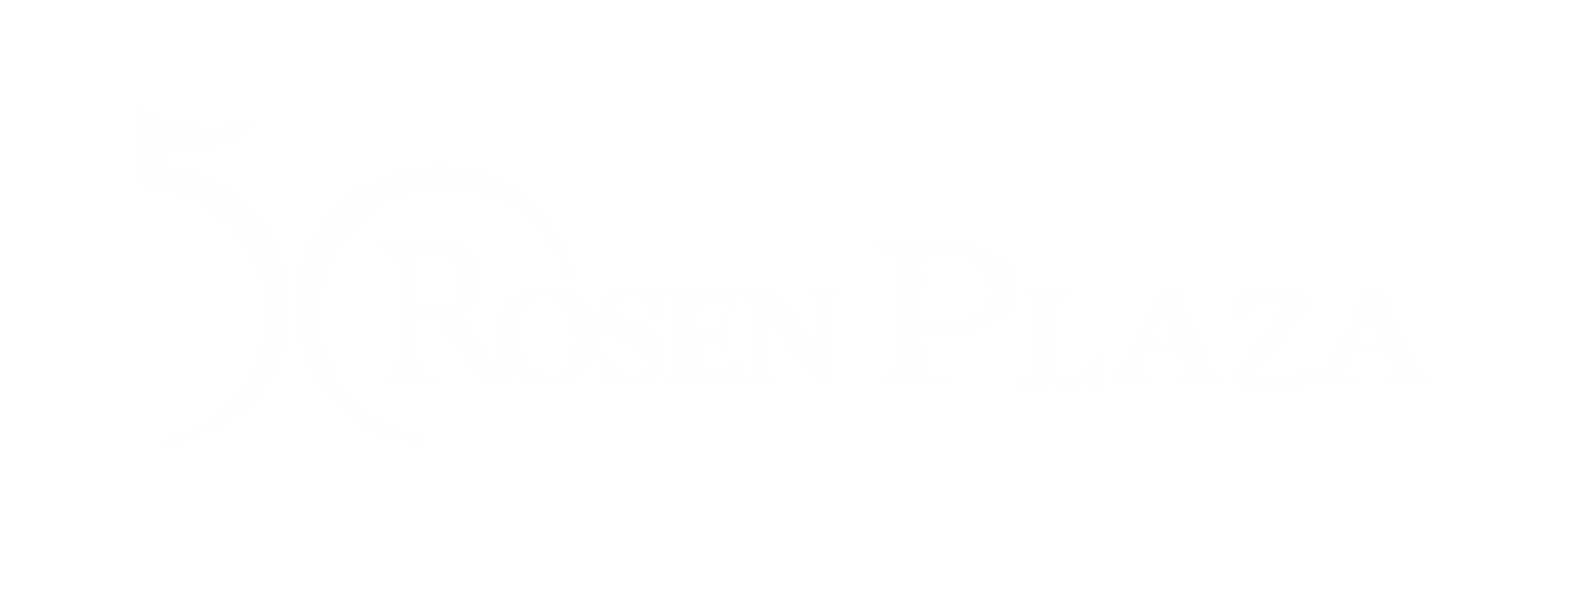 Rosen Plaza - 50th Anniversary Logo - White - No Orlando